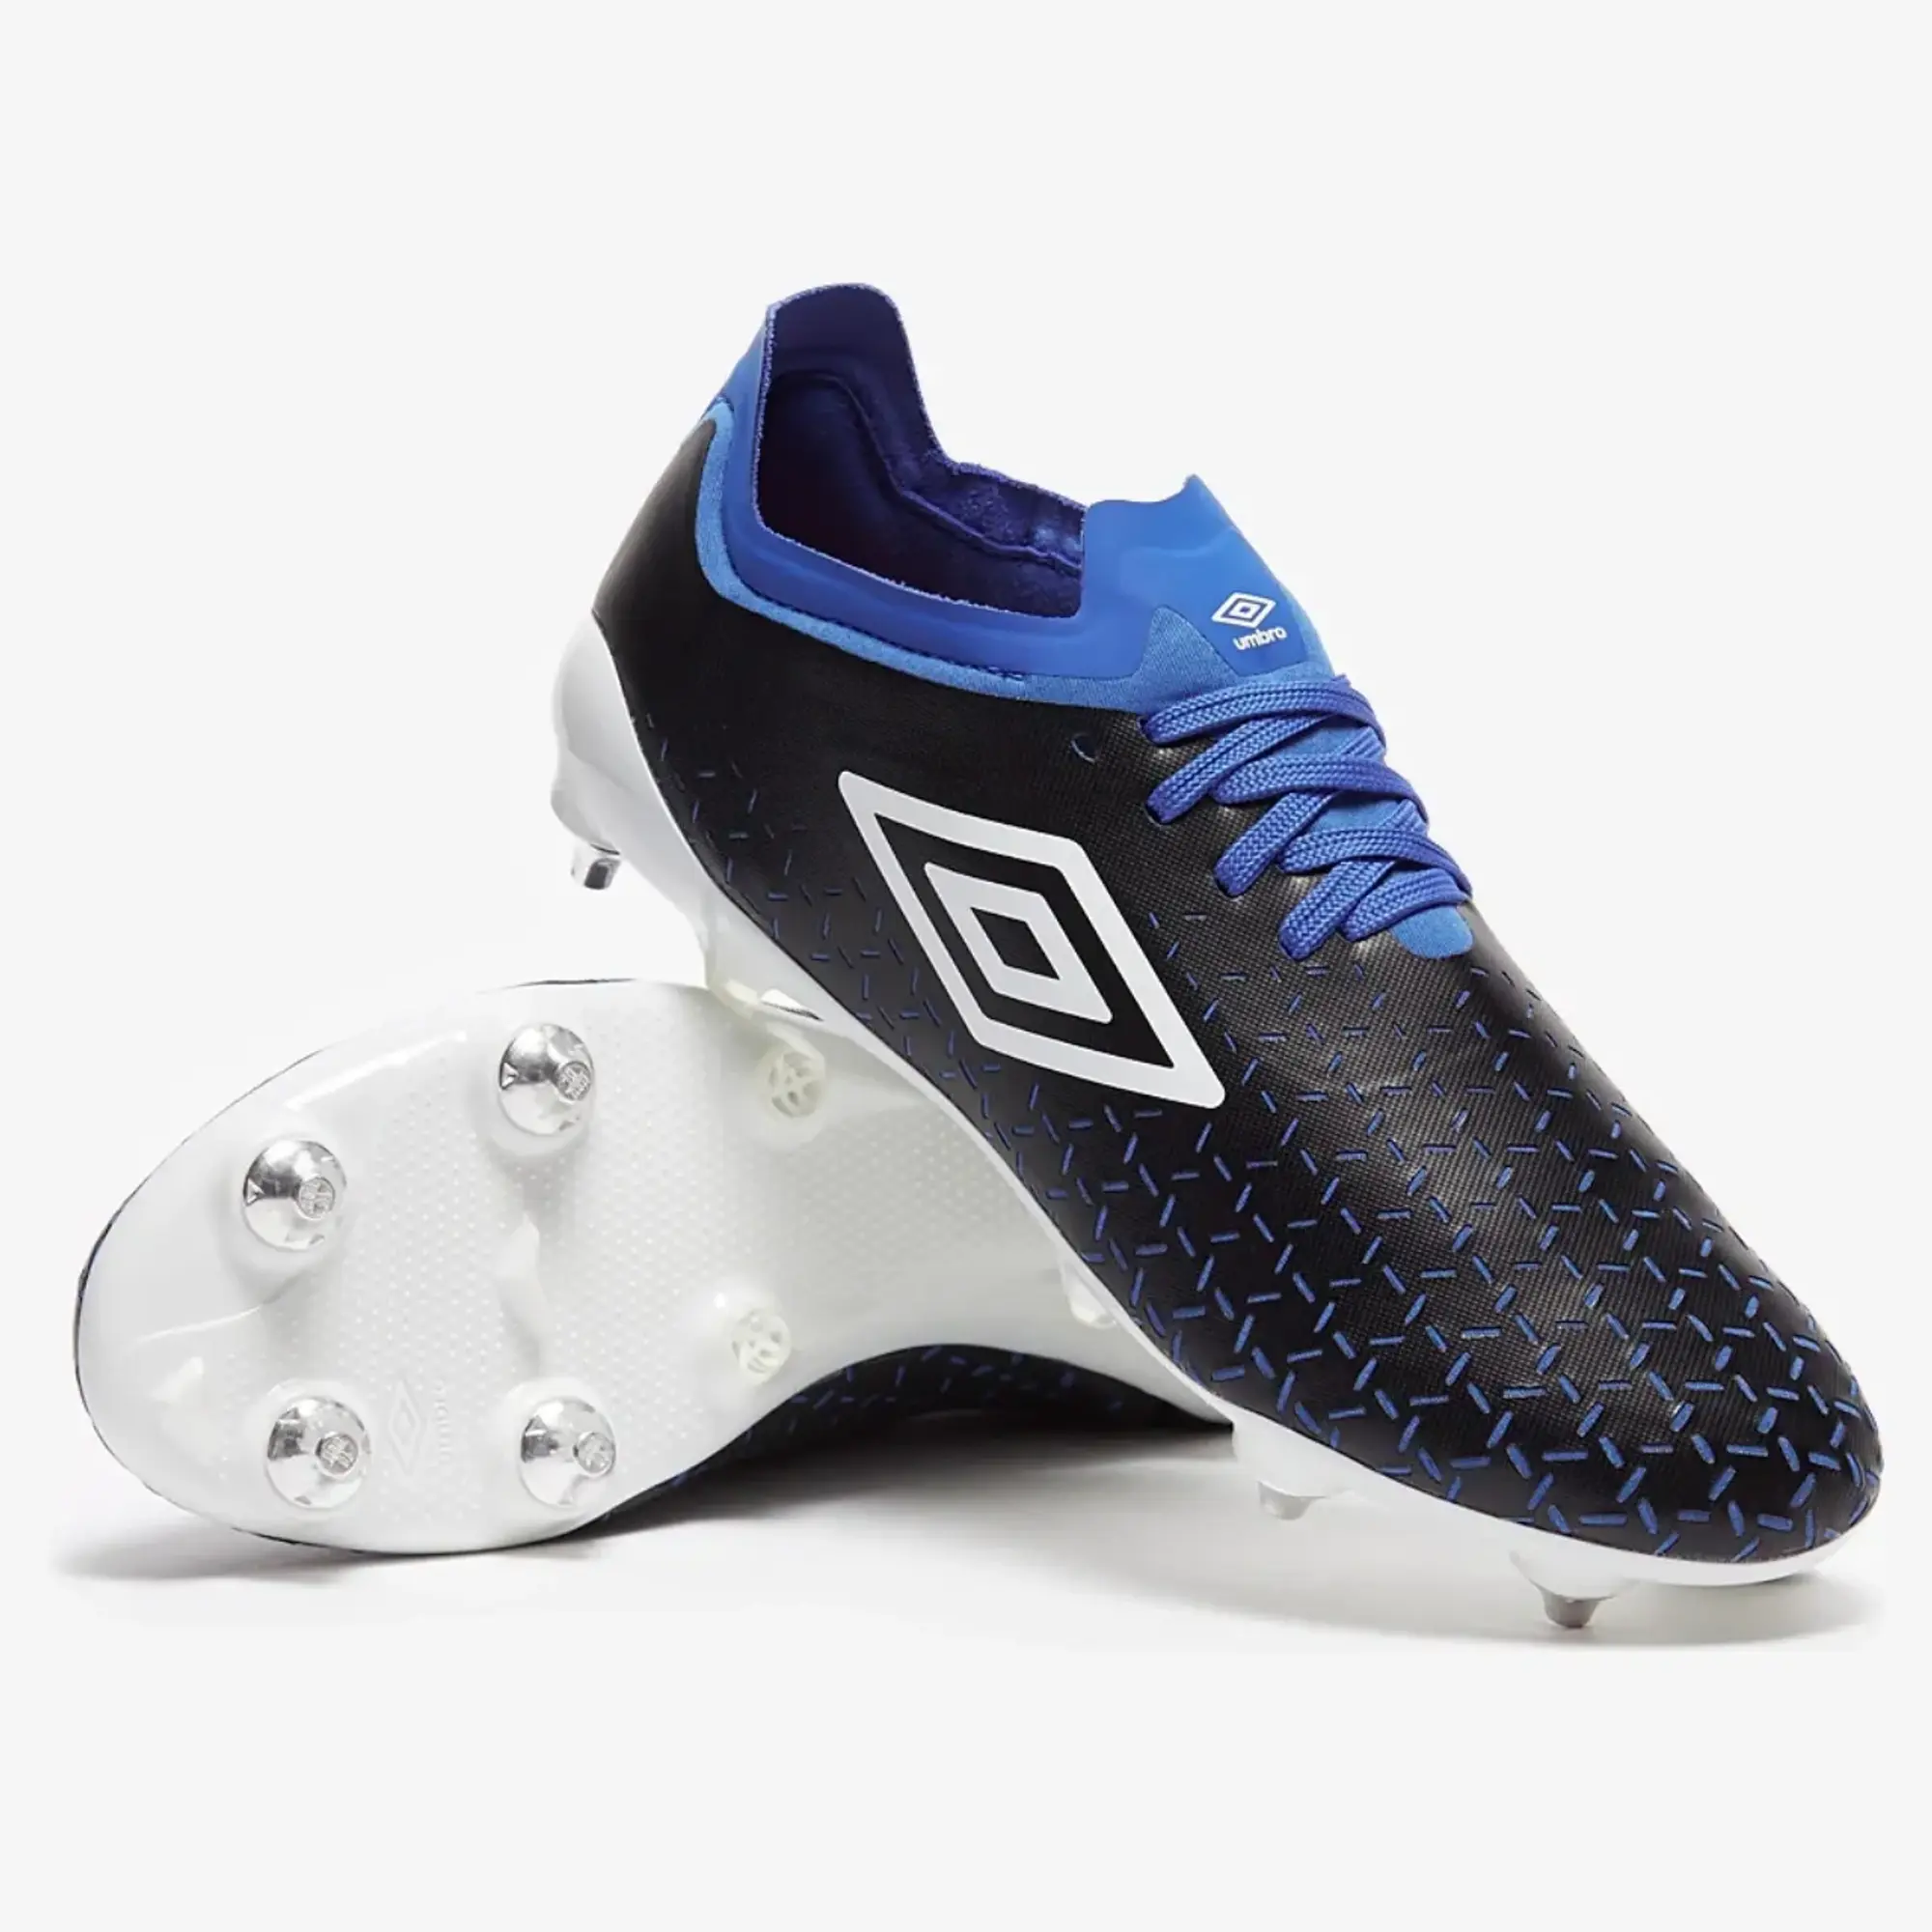 Umbro Velocita Pro Soft Football Boots Mens - Multi